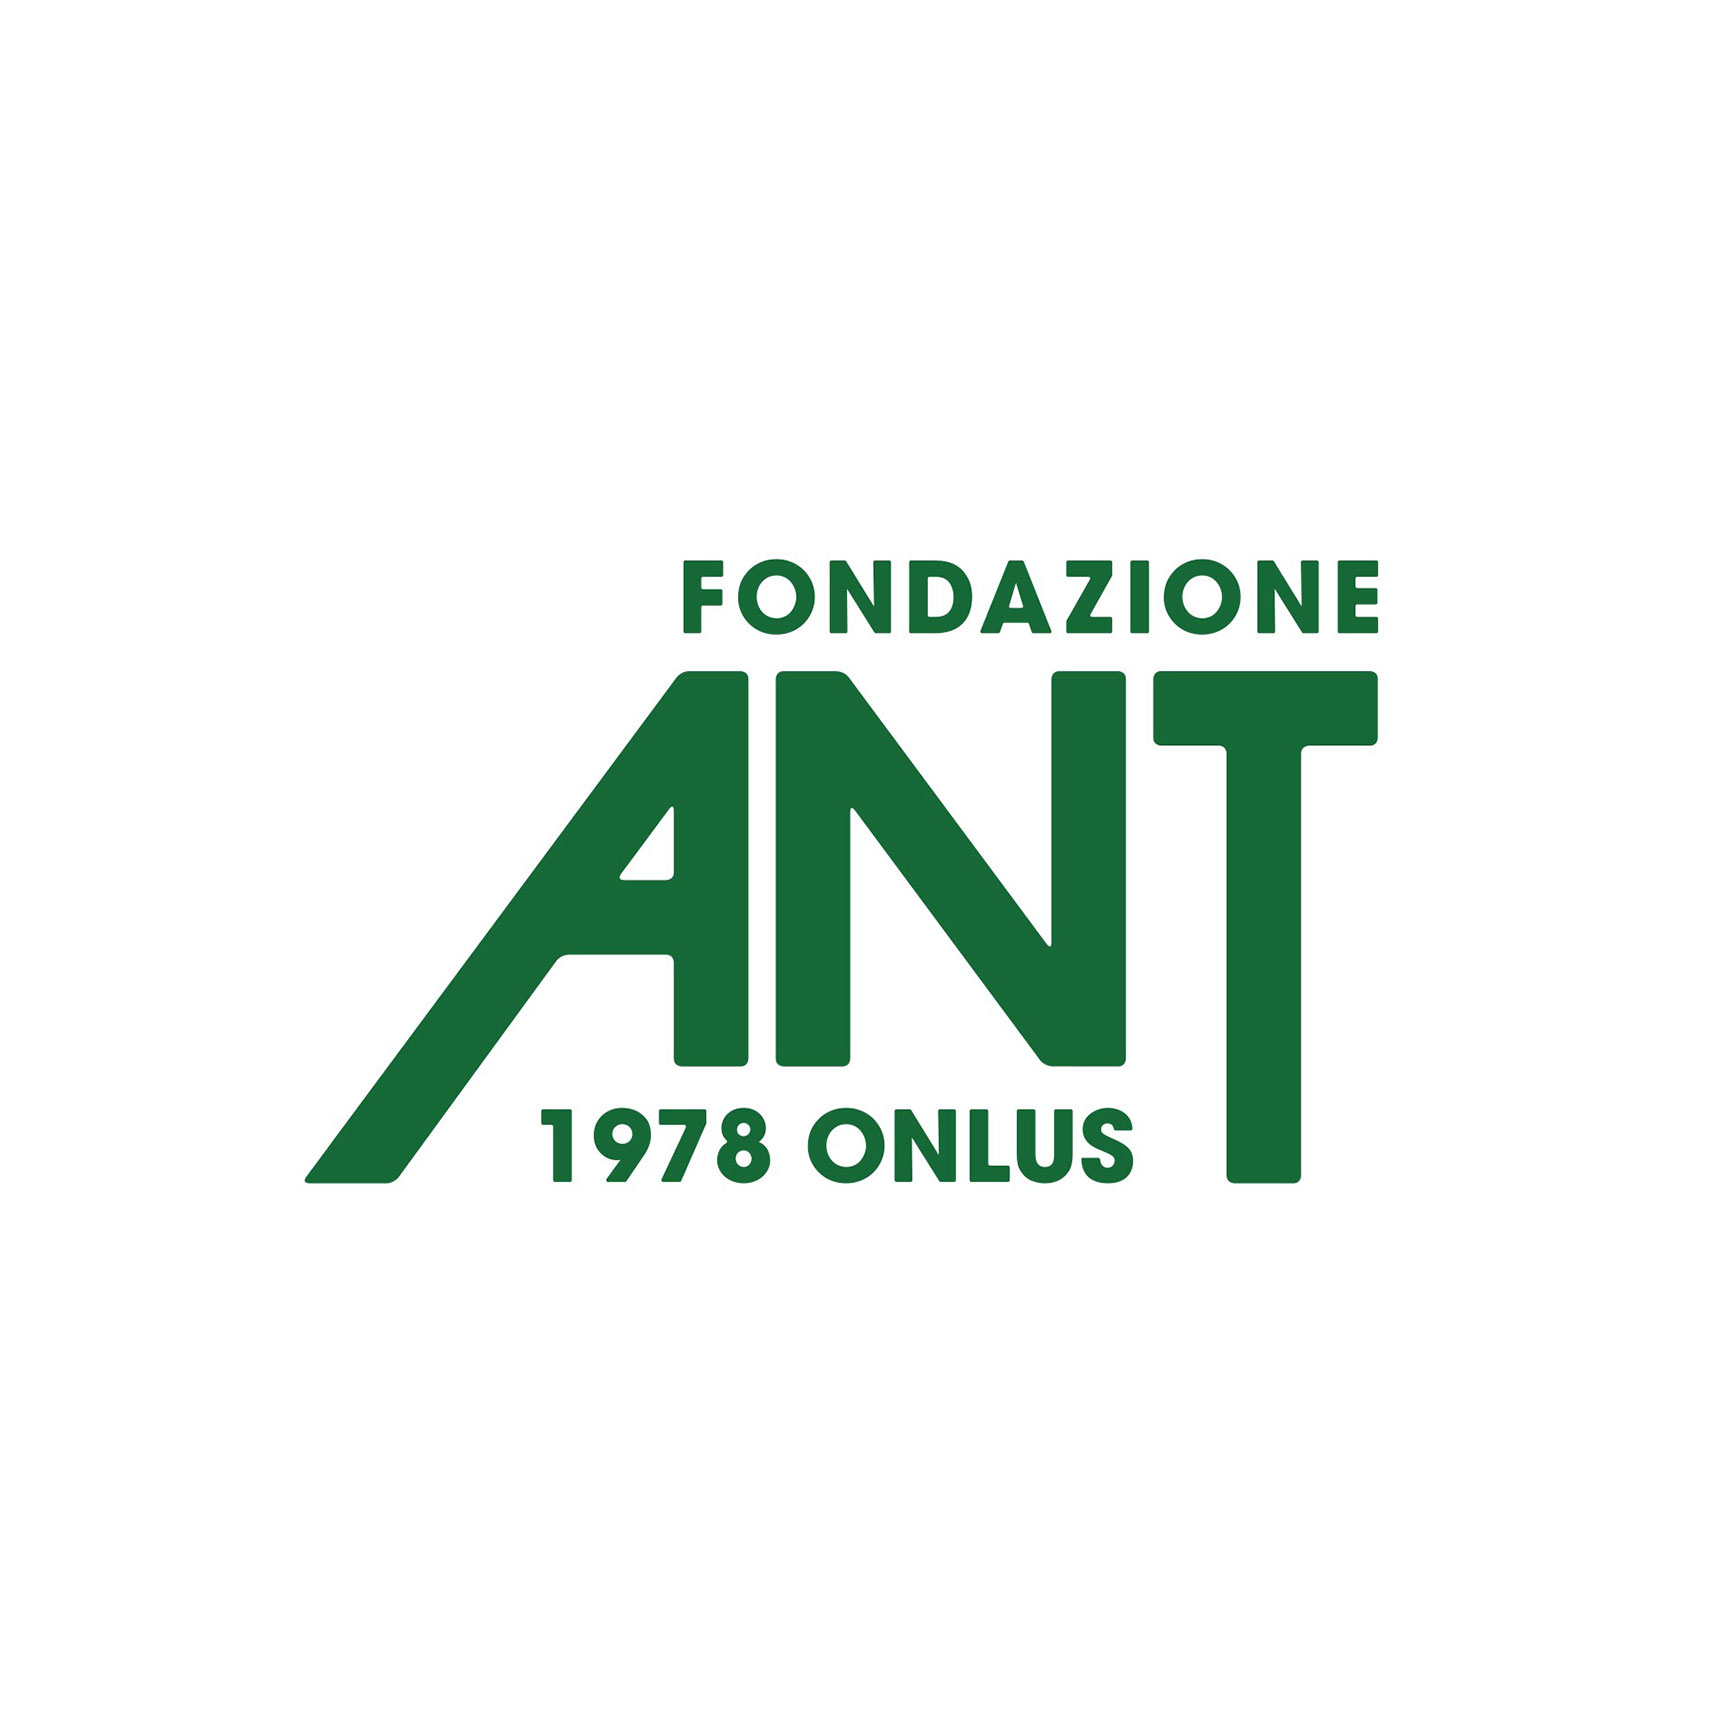 Fondazione ANT 1978 Onlus